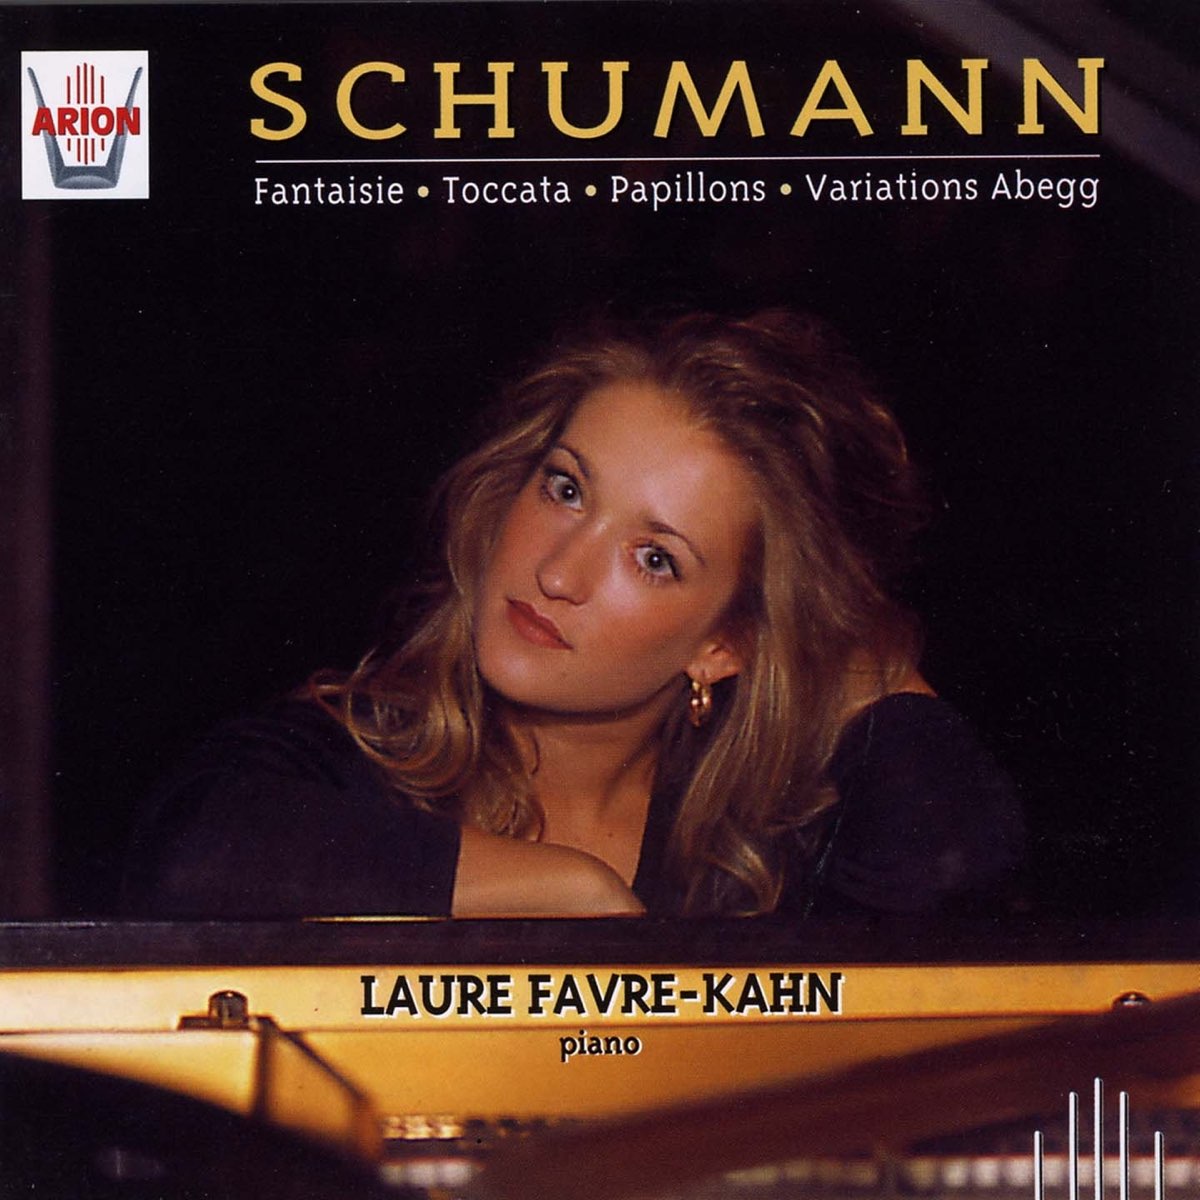 Schumann: Fantaisie, Toccata, Papillons, Variations Abegg by Laure  Favre-Kahn on Apple Music